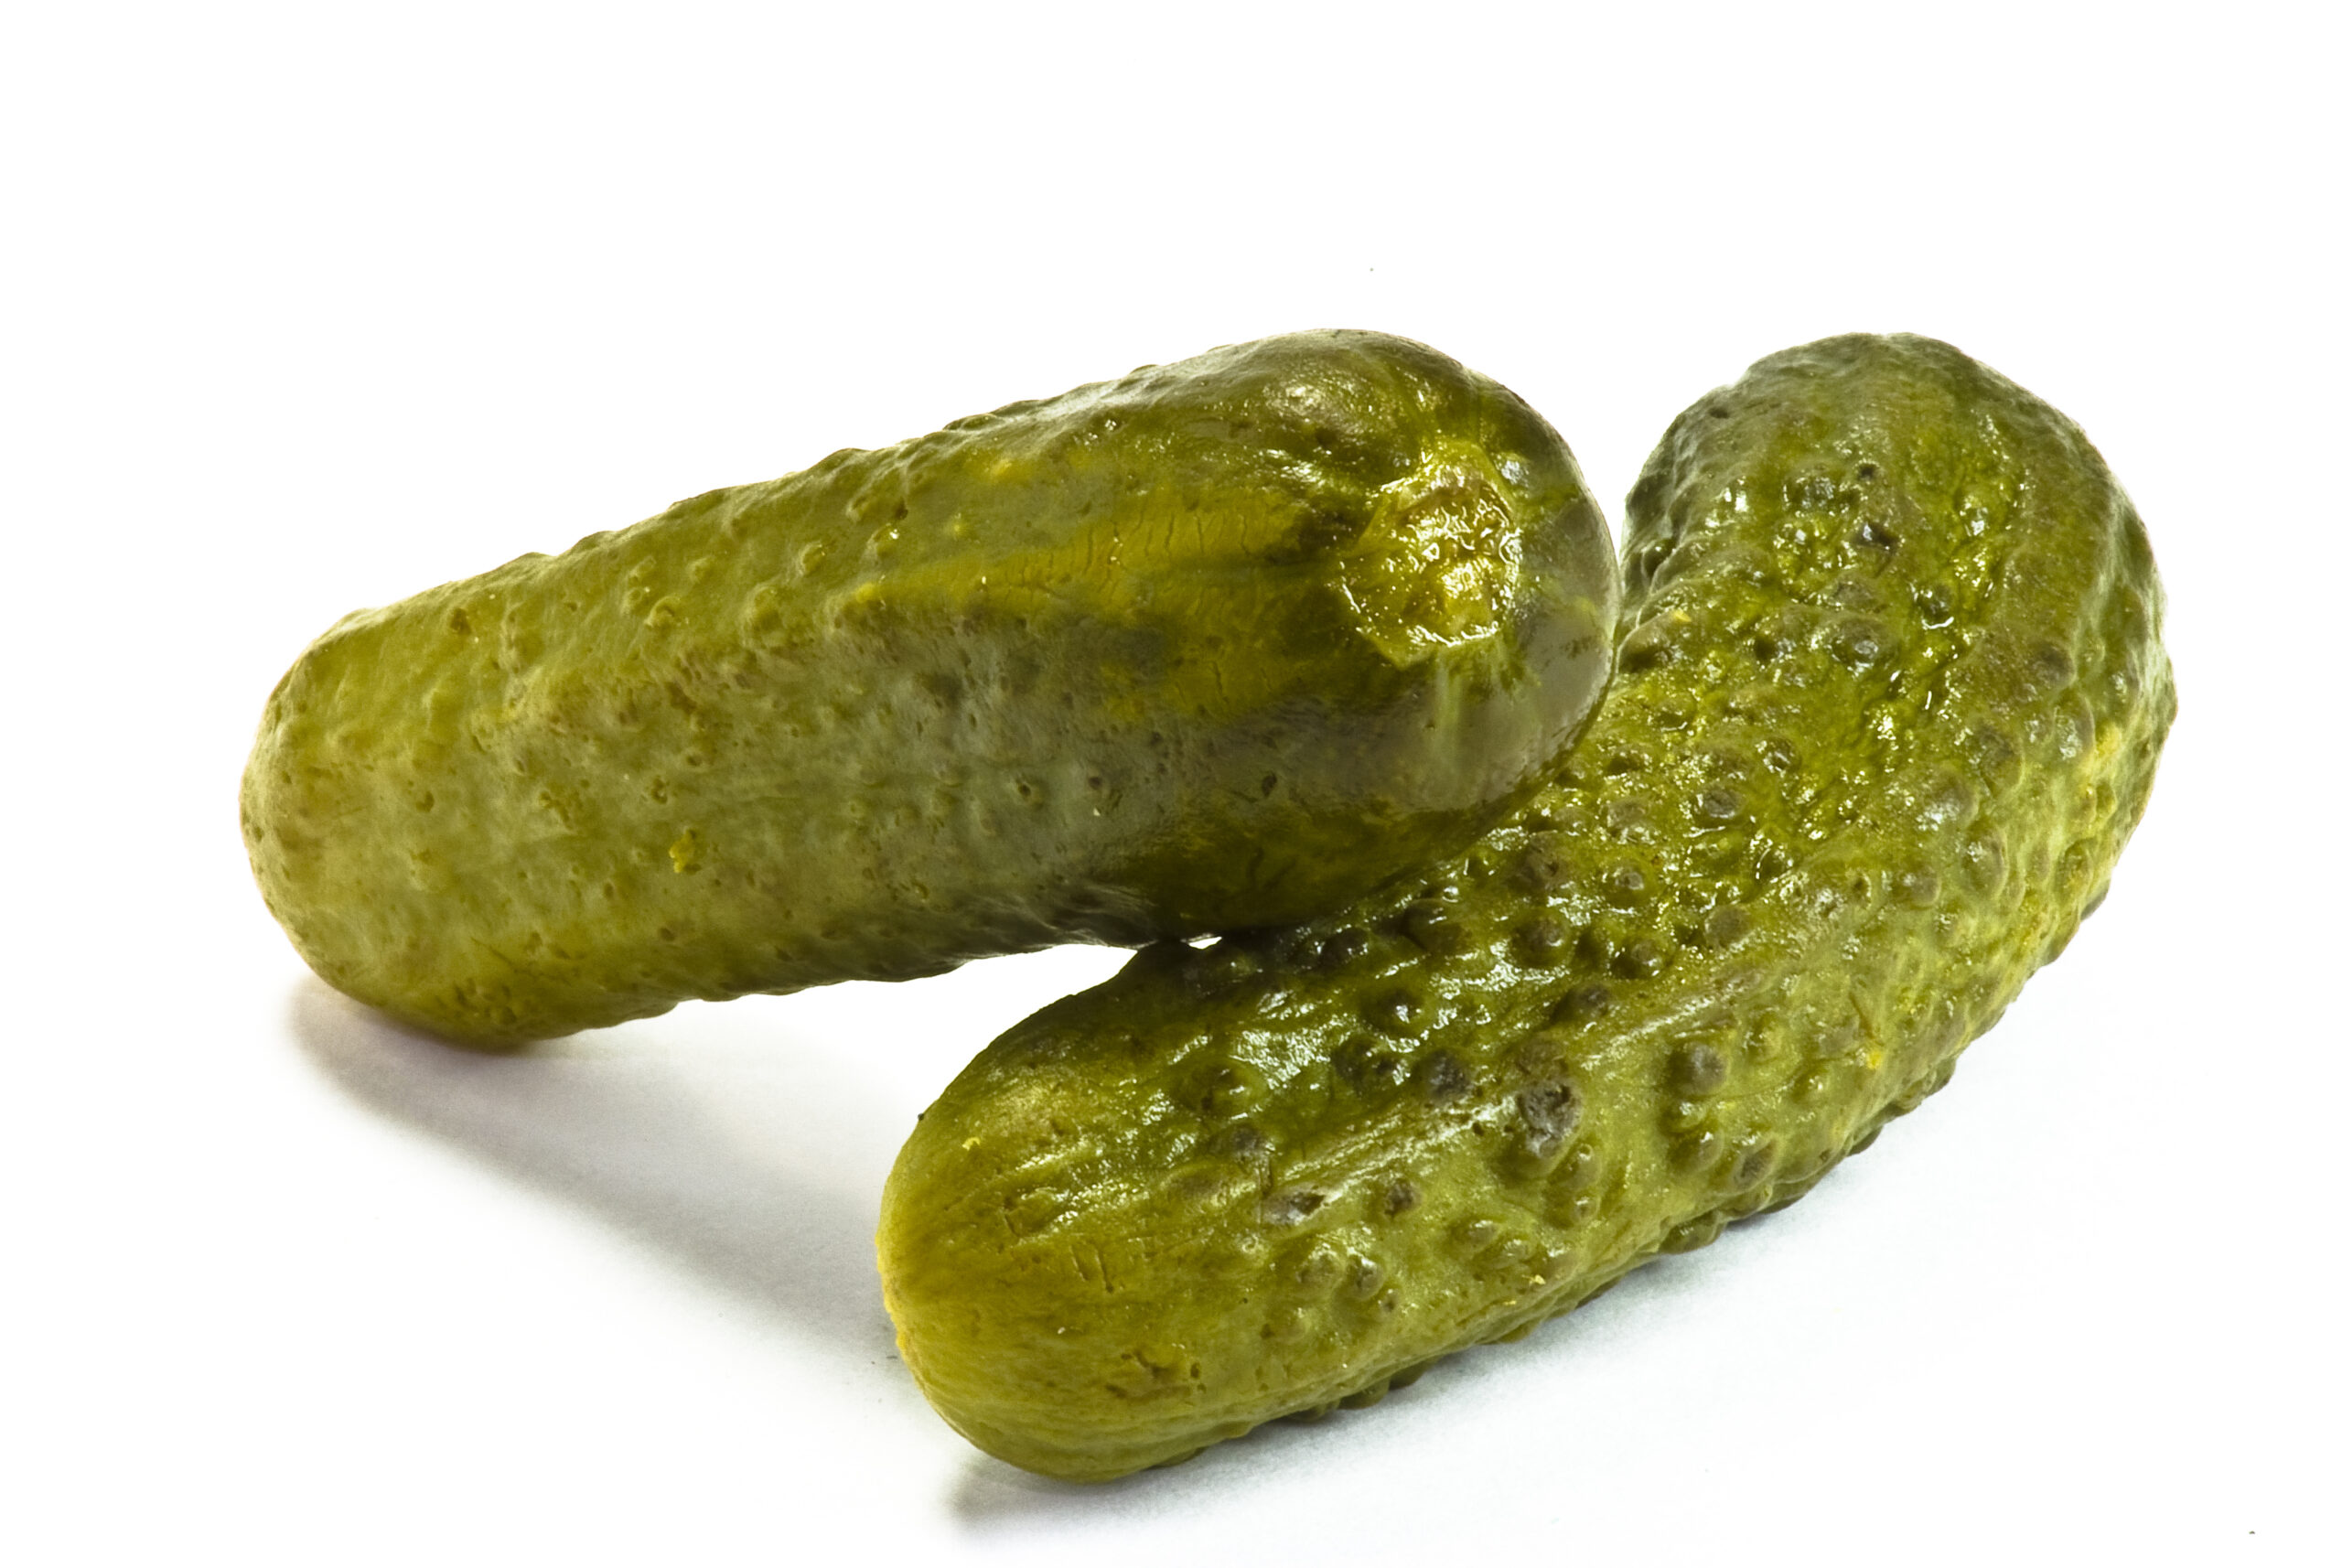 Midget sweet pickle gherkin